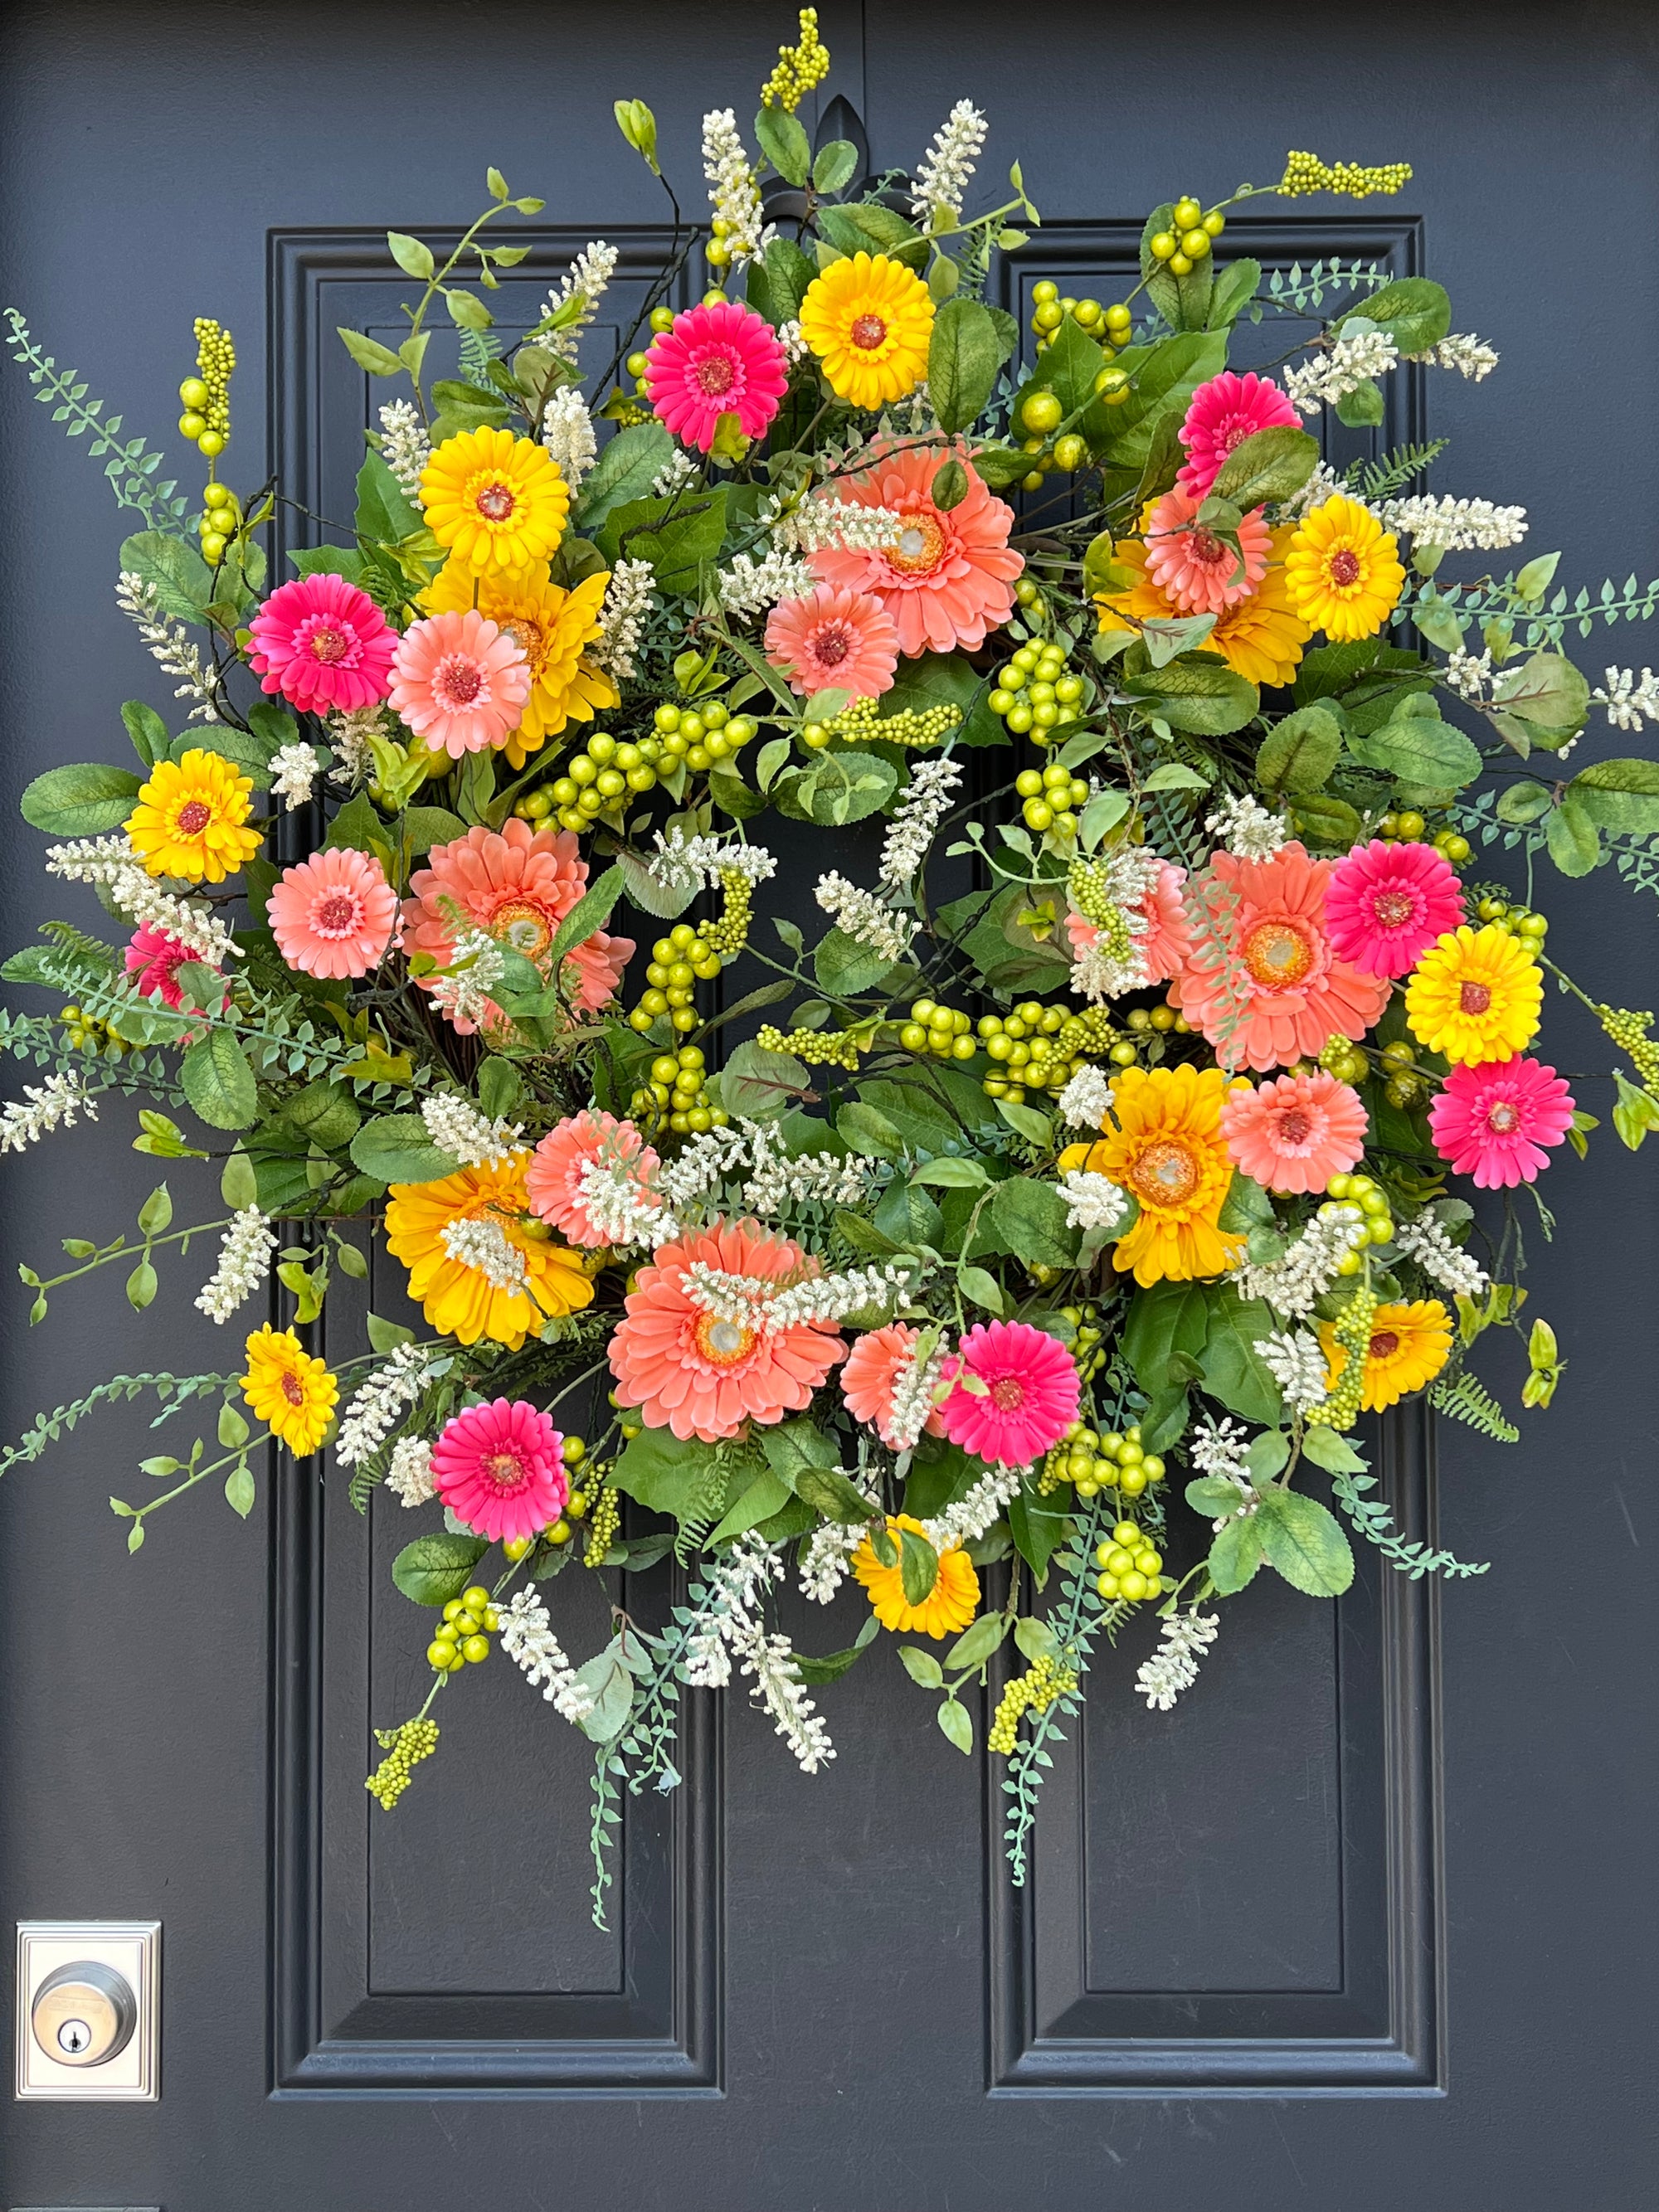 BEST OF SUMMER Gerbera Daisy Wreath for Summer, Front Door Wreaths for Summertime